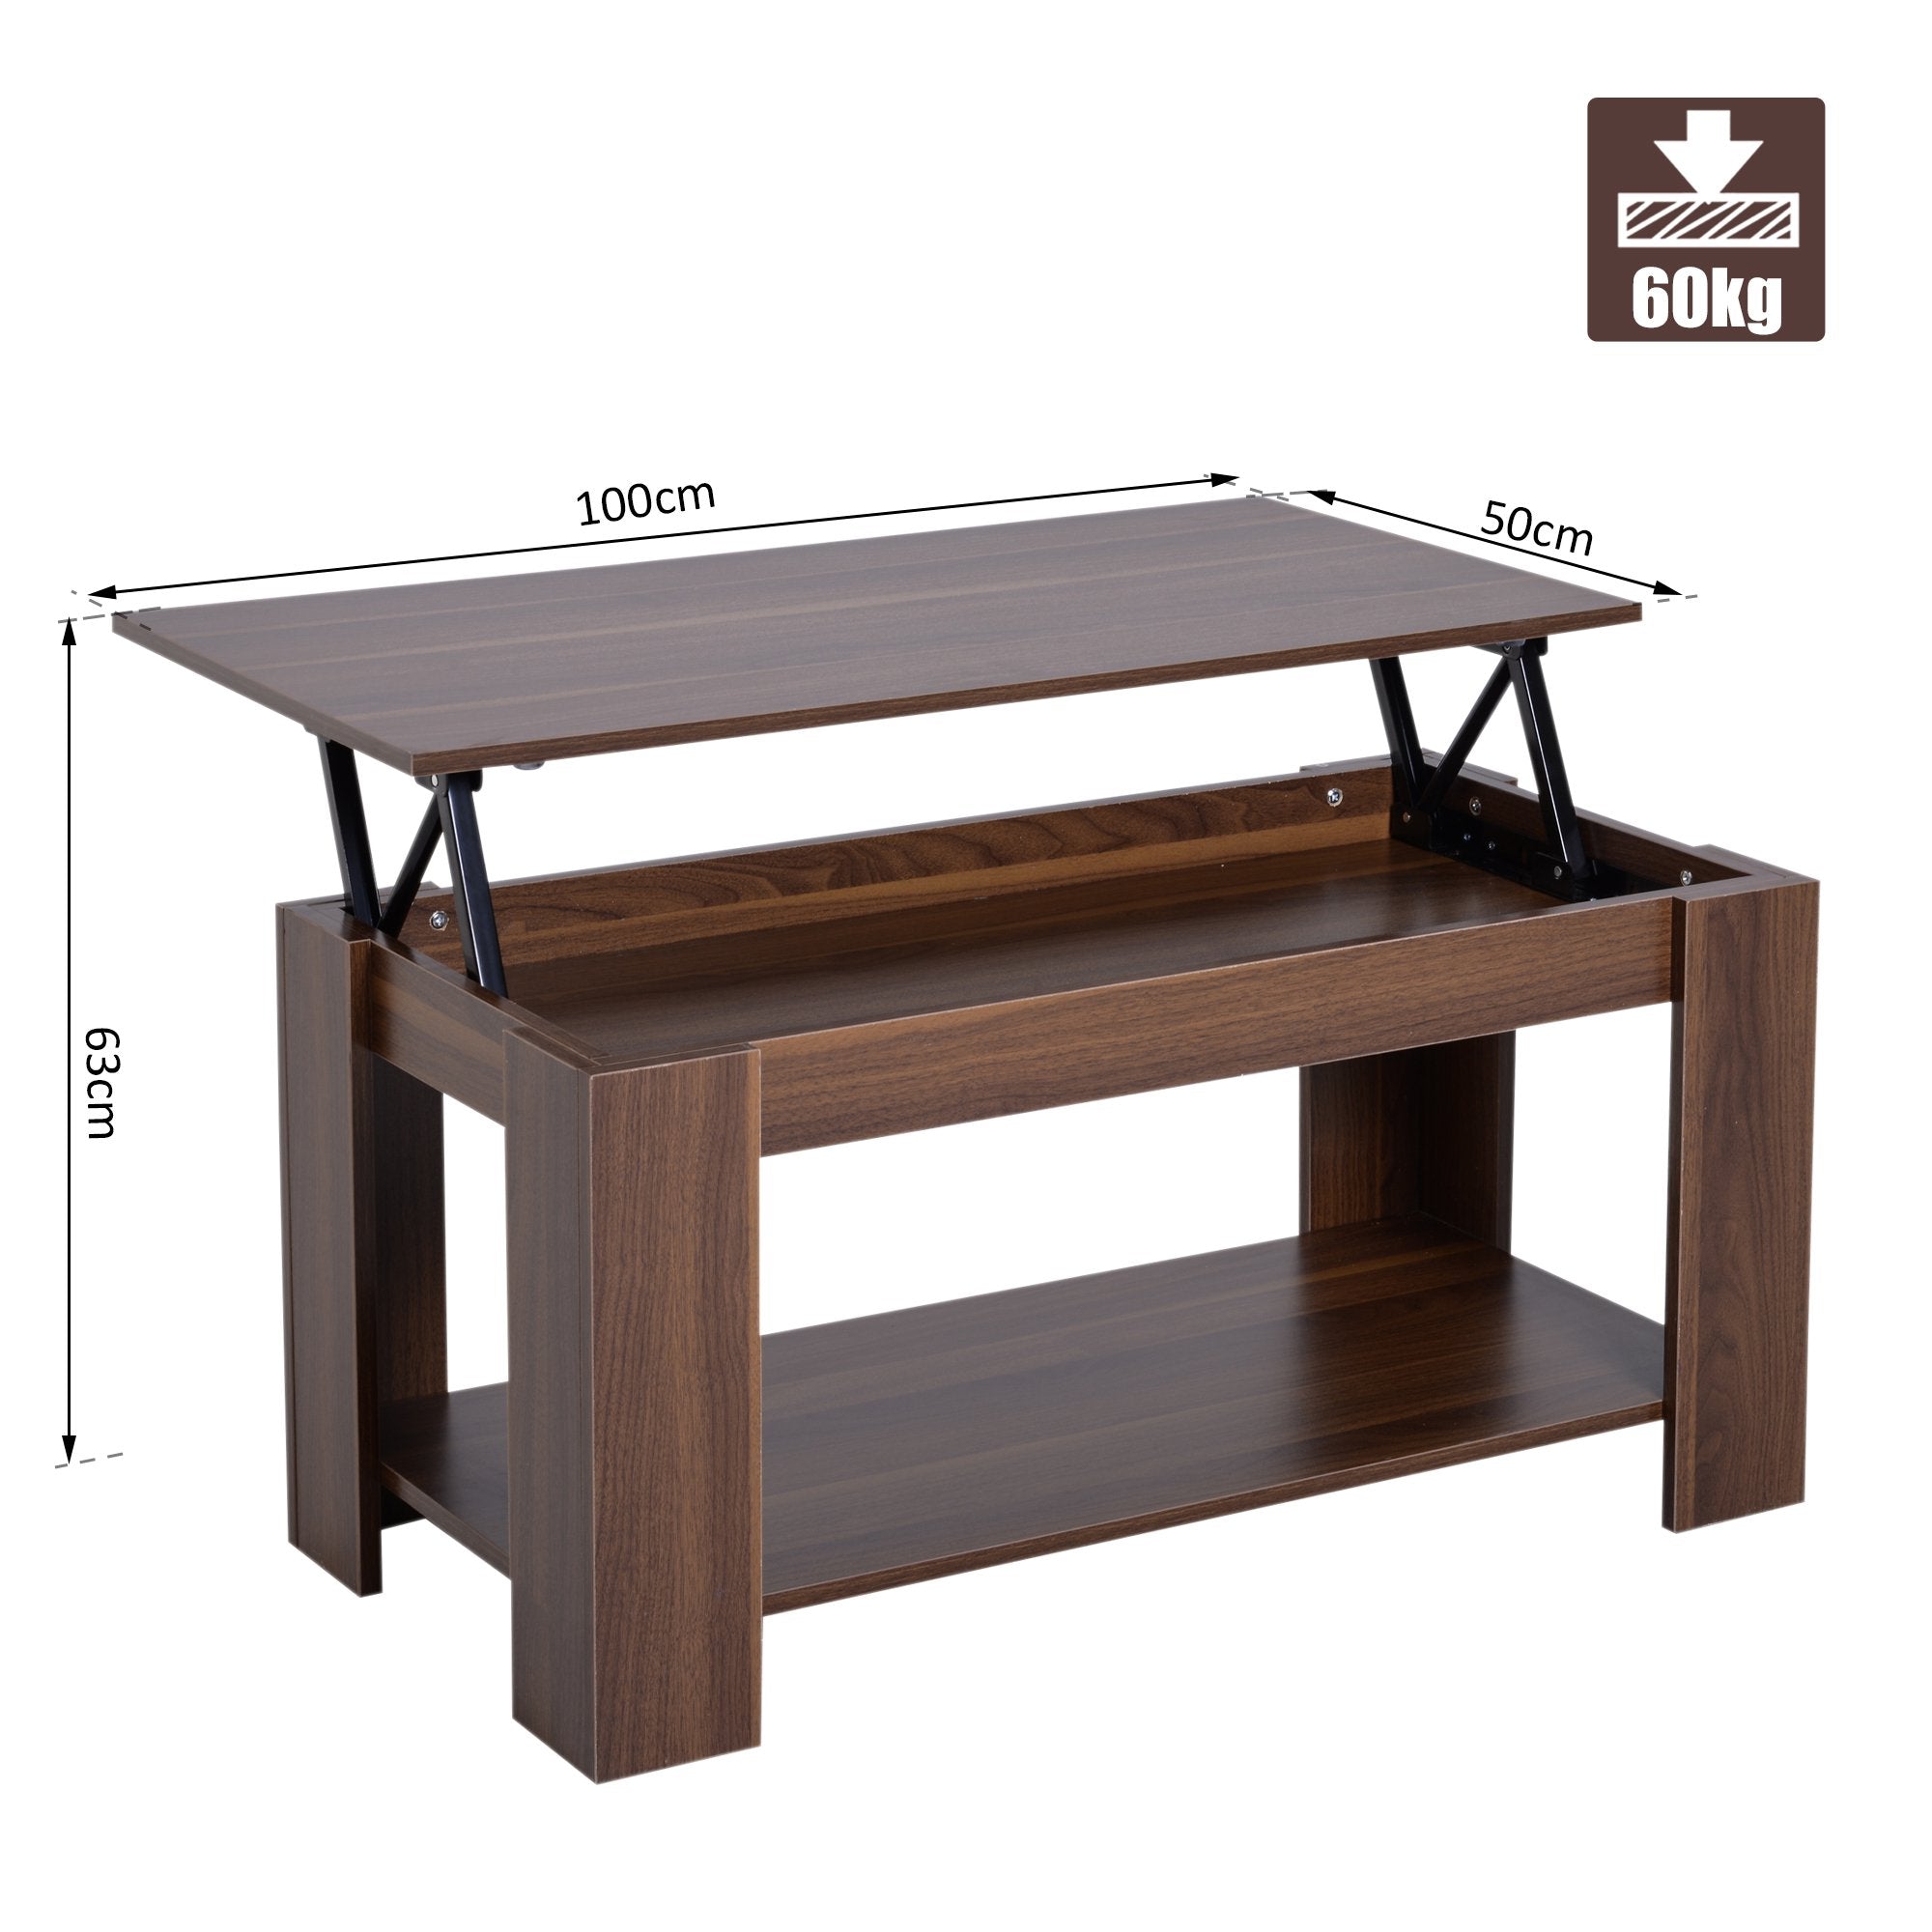 Modern Lift Up Top Coffee Table, 100W X 50D 50/63Hcm Cm - Natural Wood Grain Colour